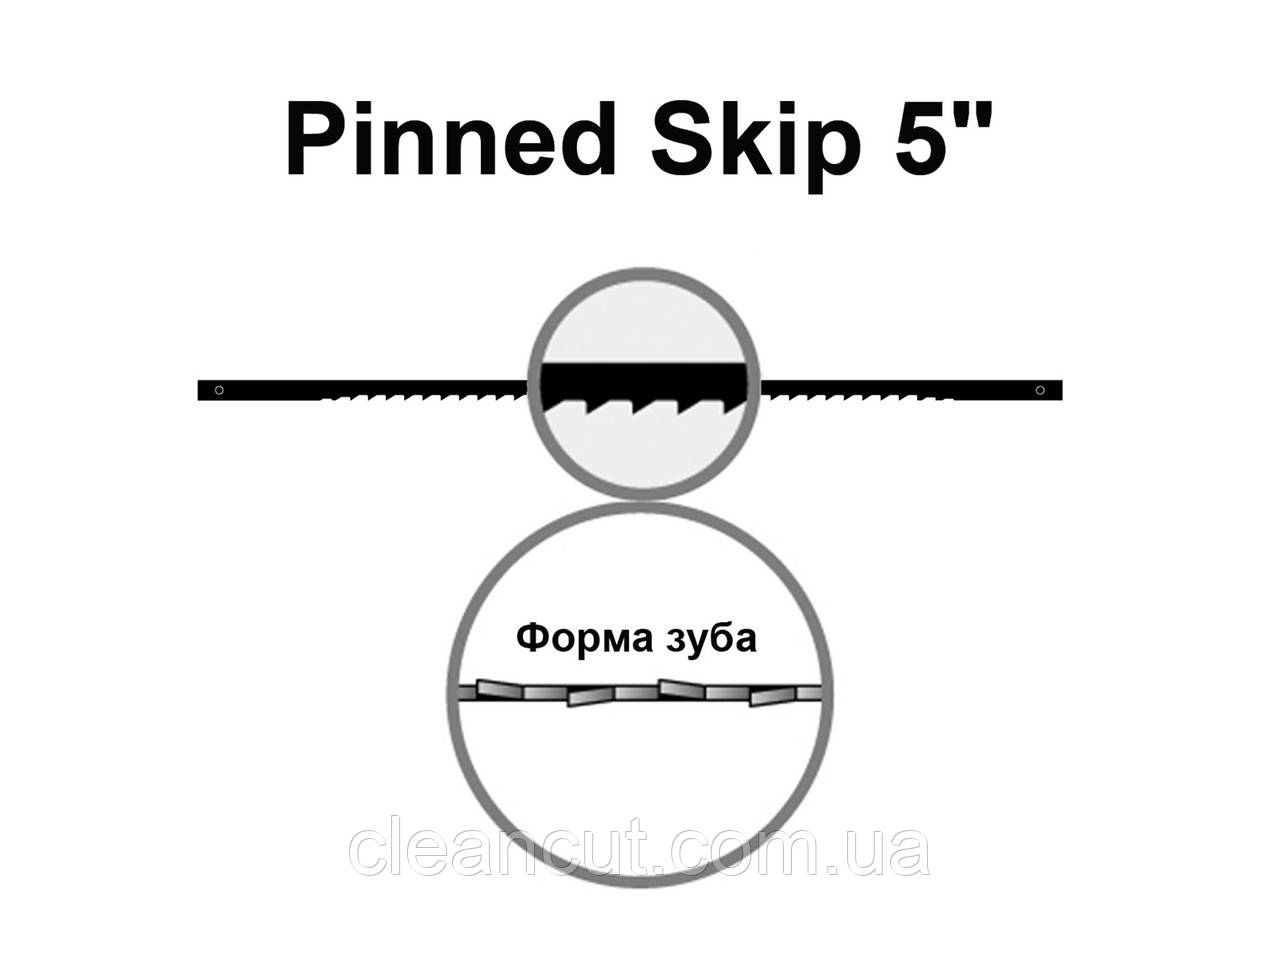 Pinned Skip 5" 18 tpi штифтова пилочка для лобзикового верстата, комплект 3 шт.